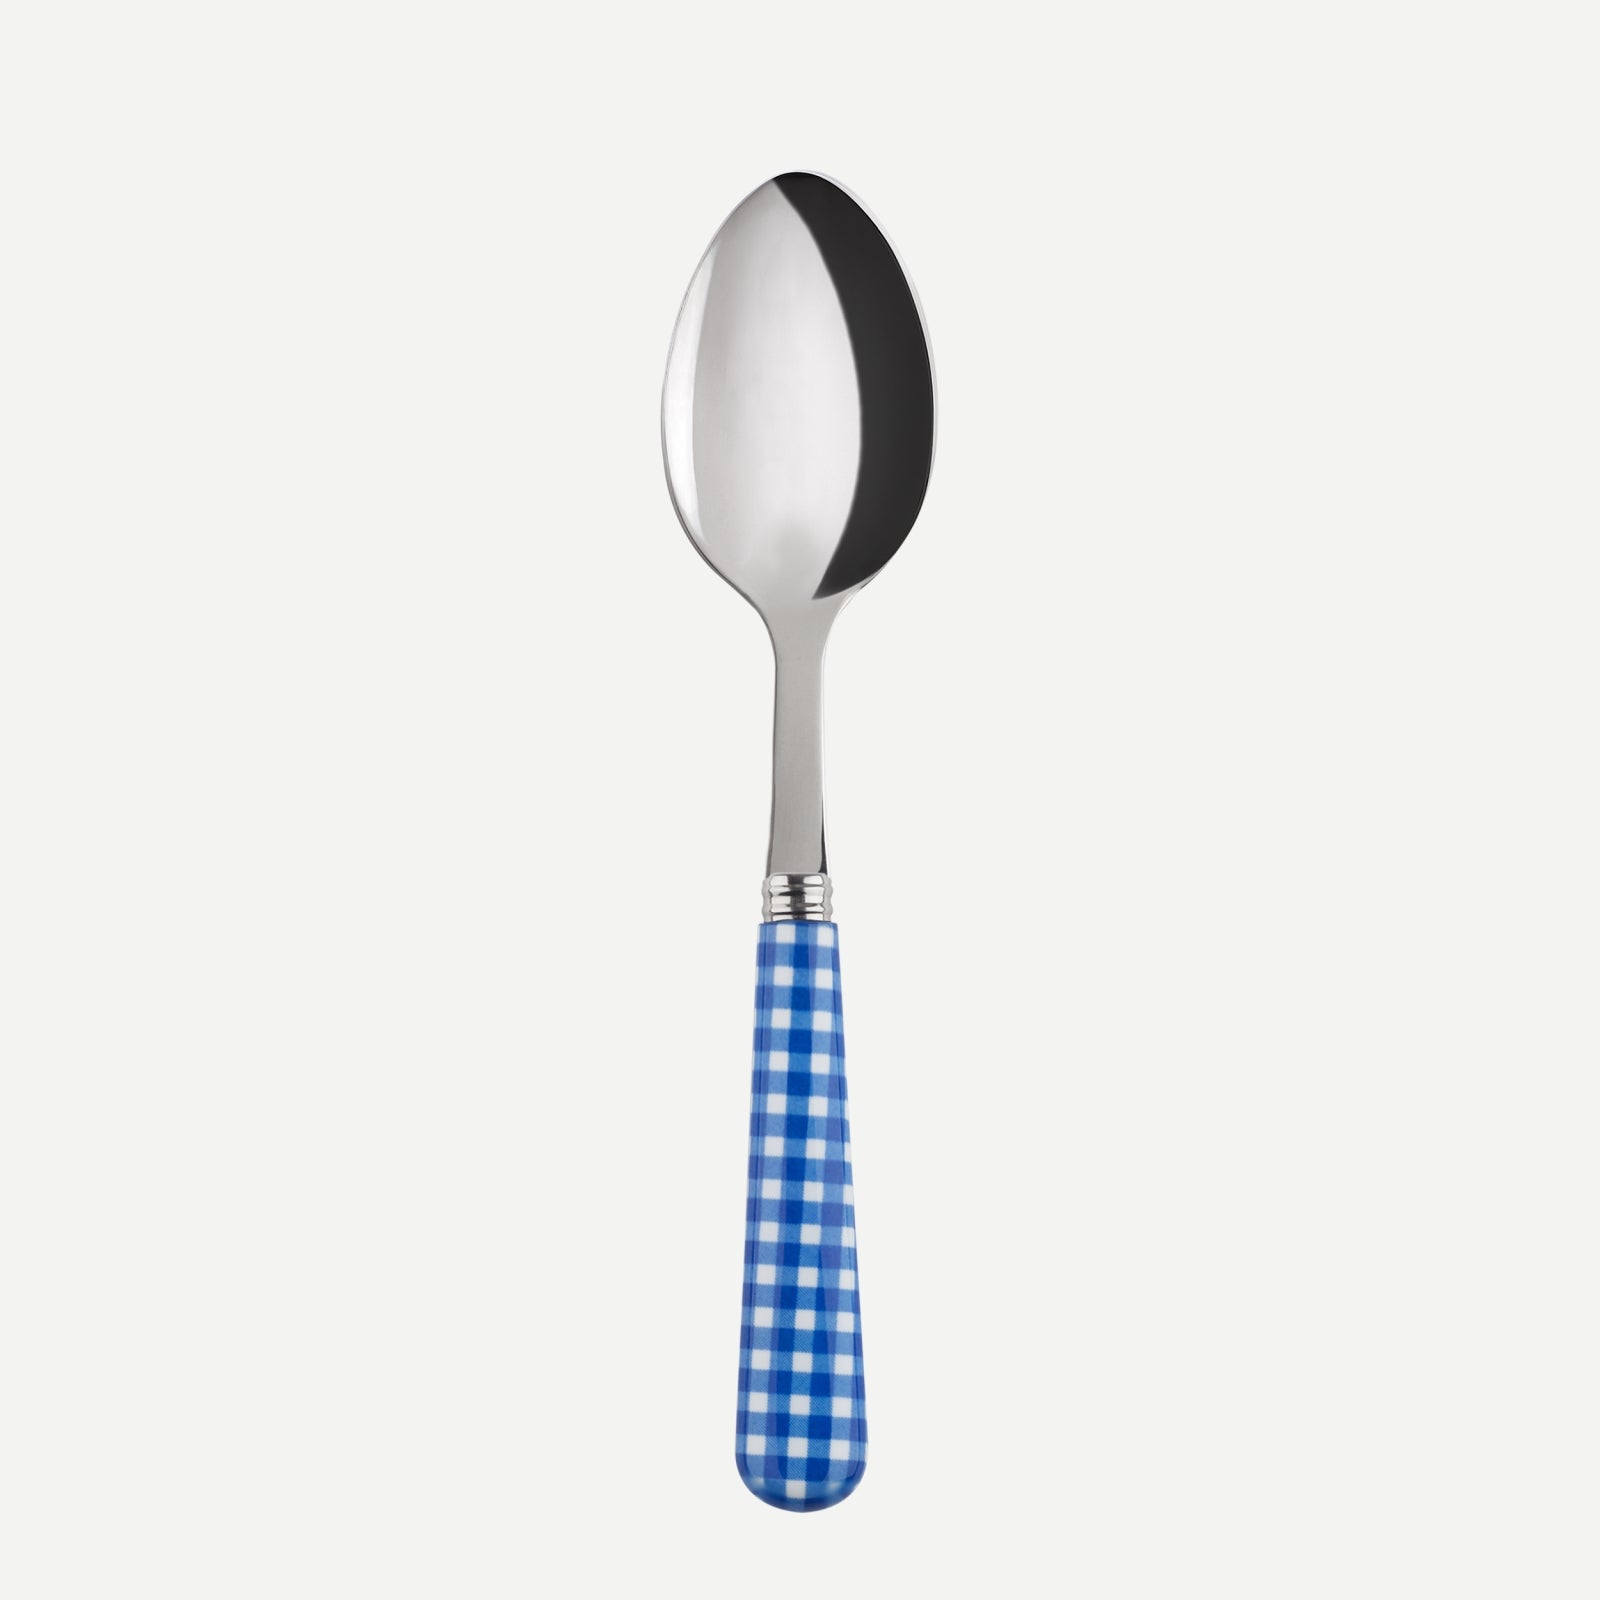 Cake spoon - Gingham - Lapis blue